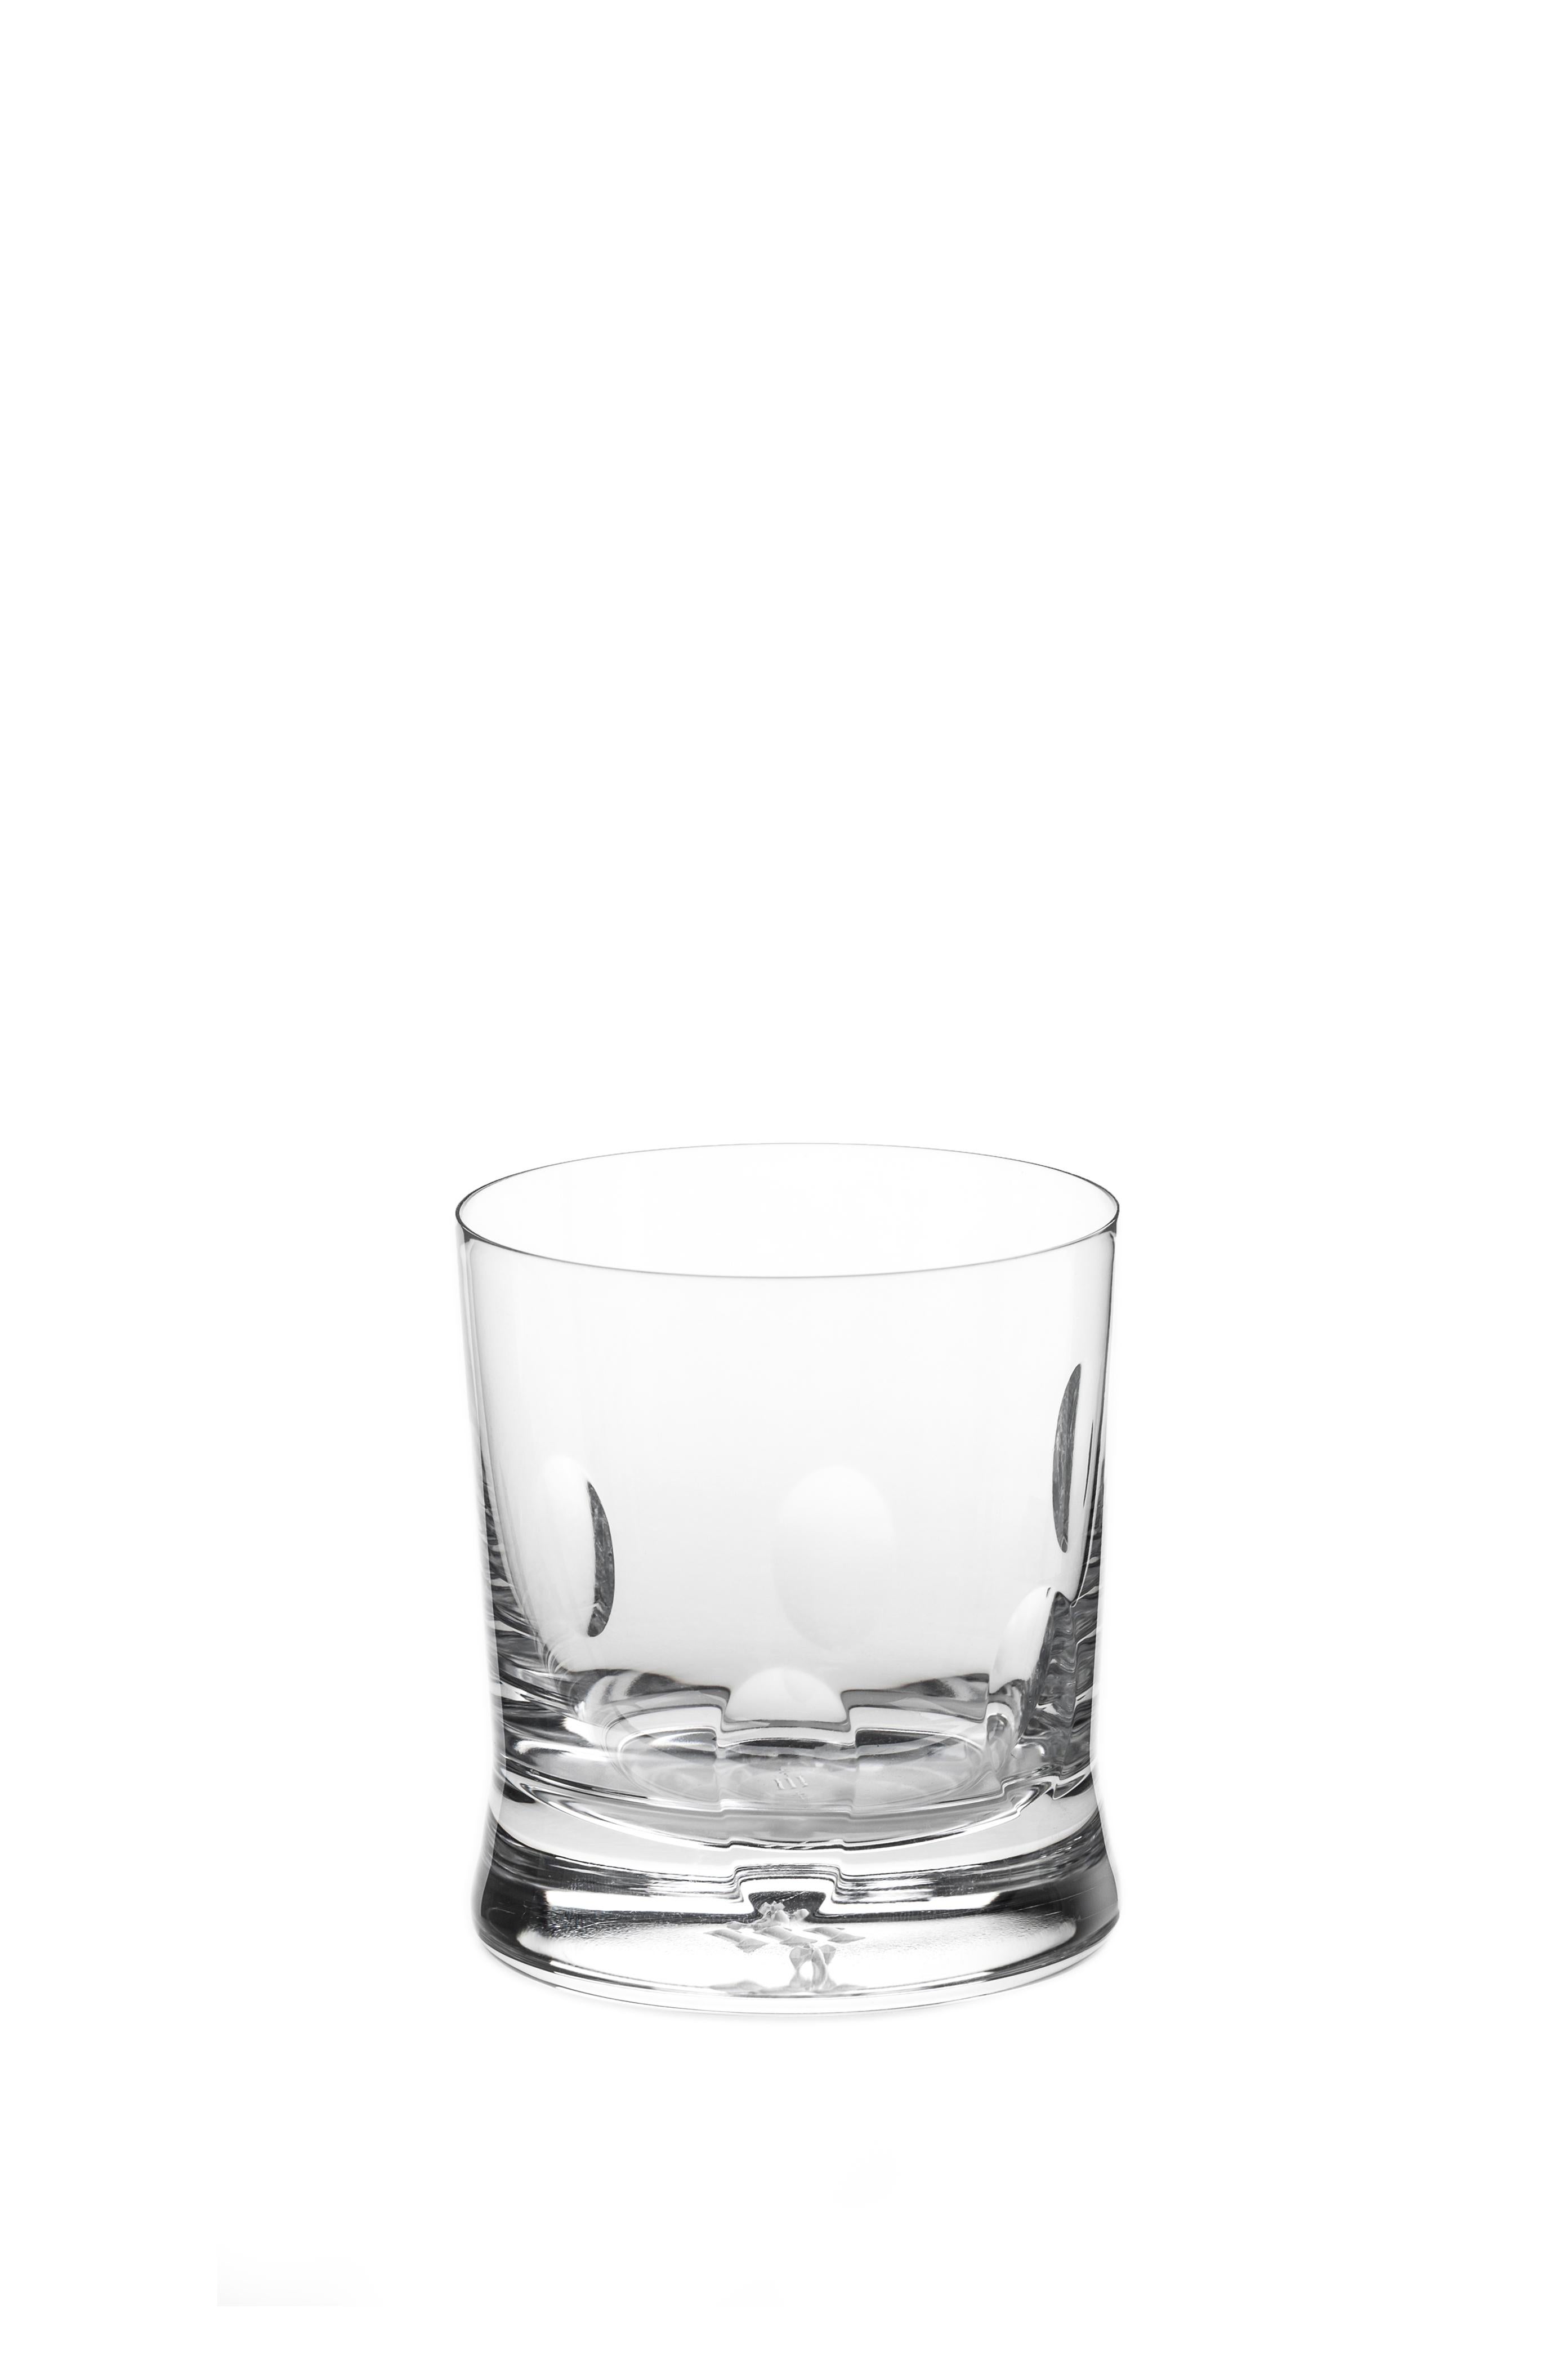 Cut Glass Martino Gamper Handmade Irish Crystal Whiskey Tumbler Cuttings Series CUT II For Sale